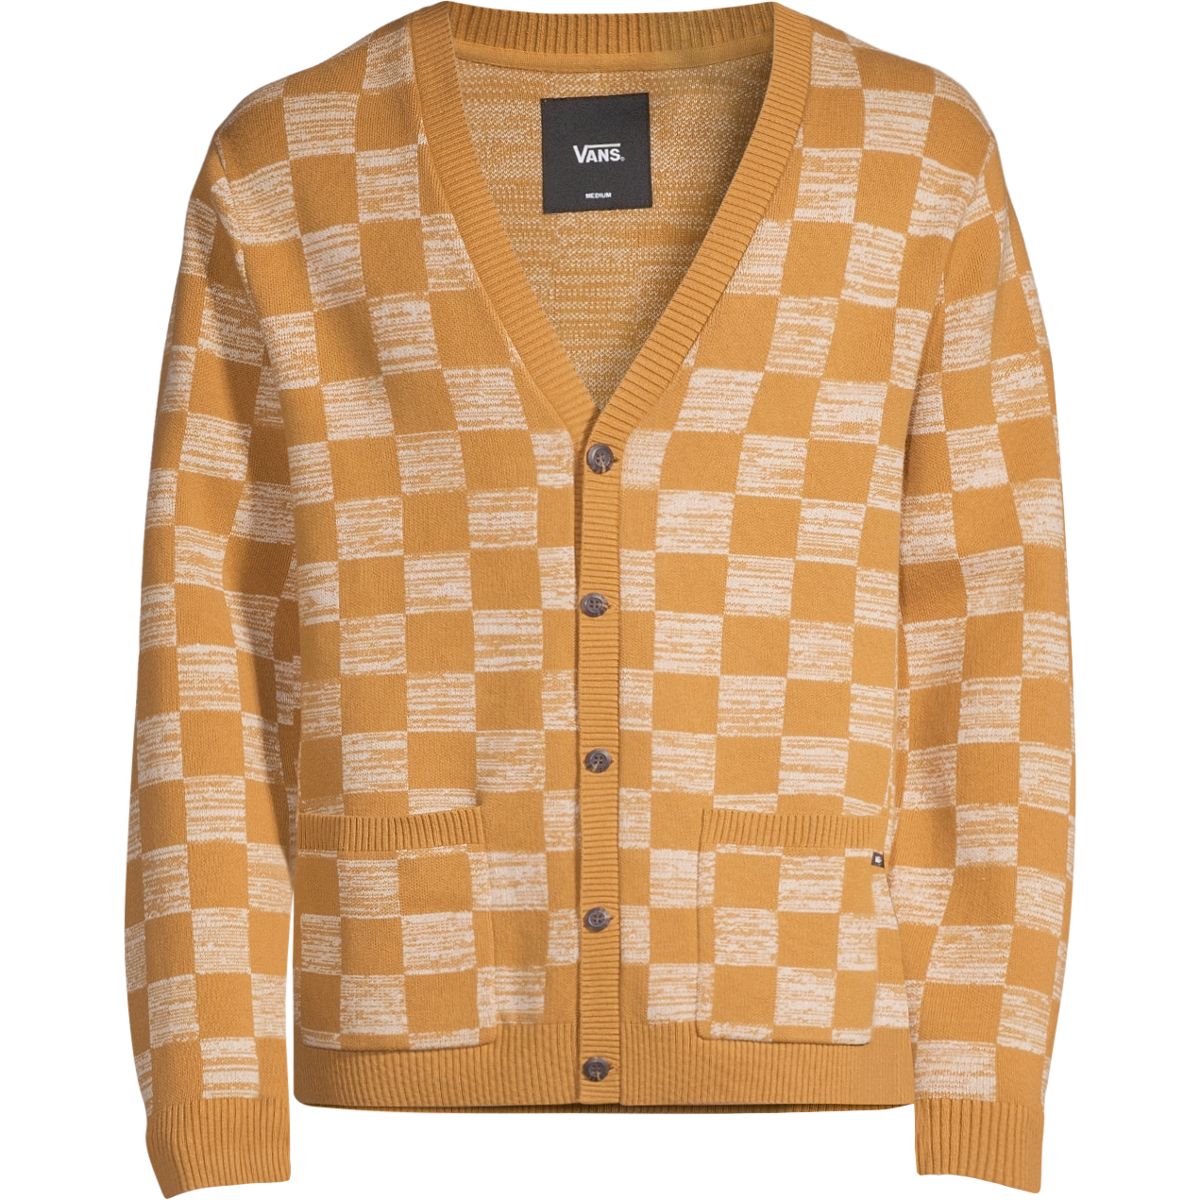 Vans Men's Checkerboard Jacquard Cardigan